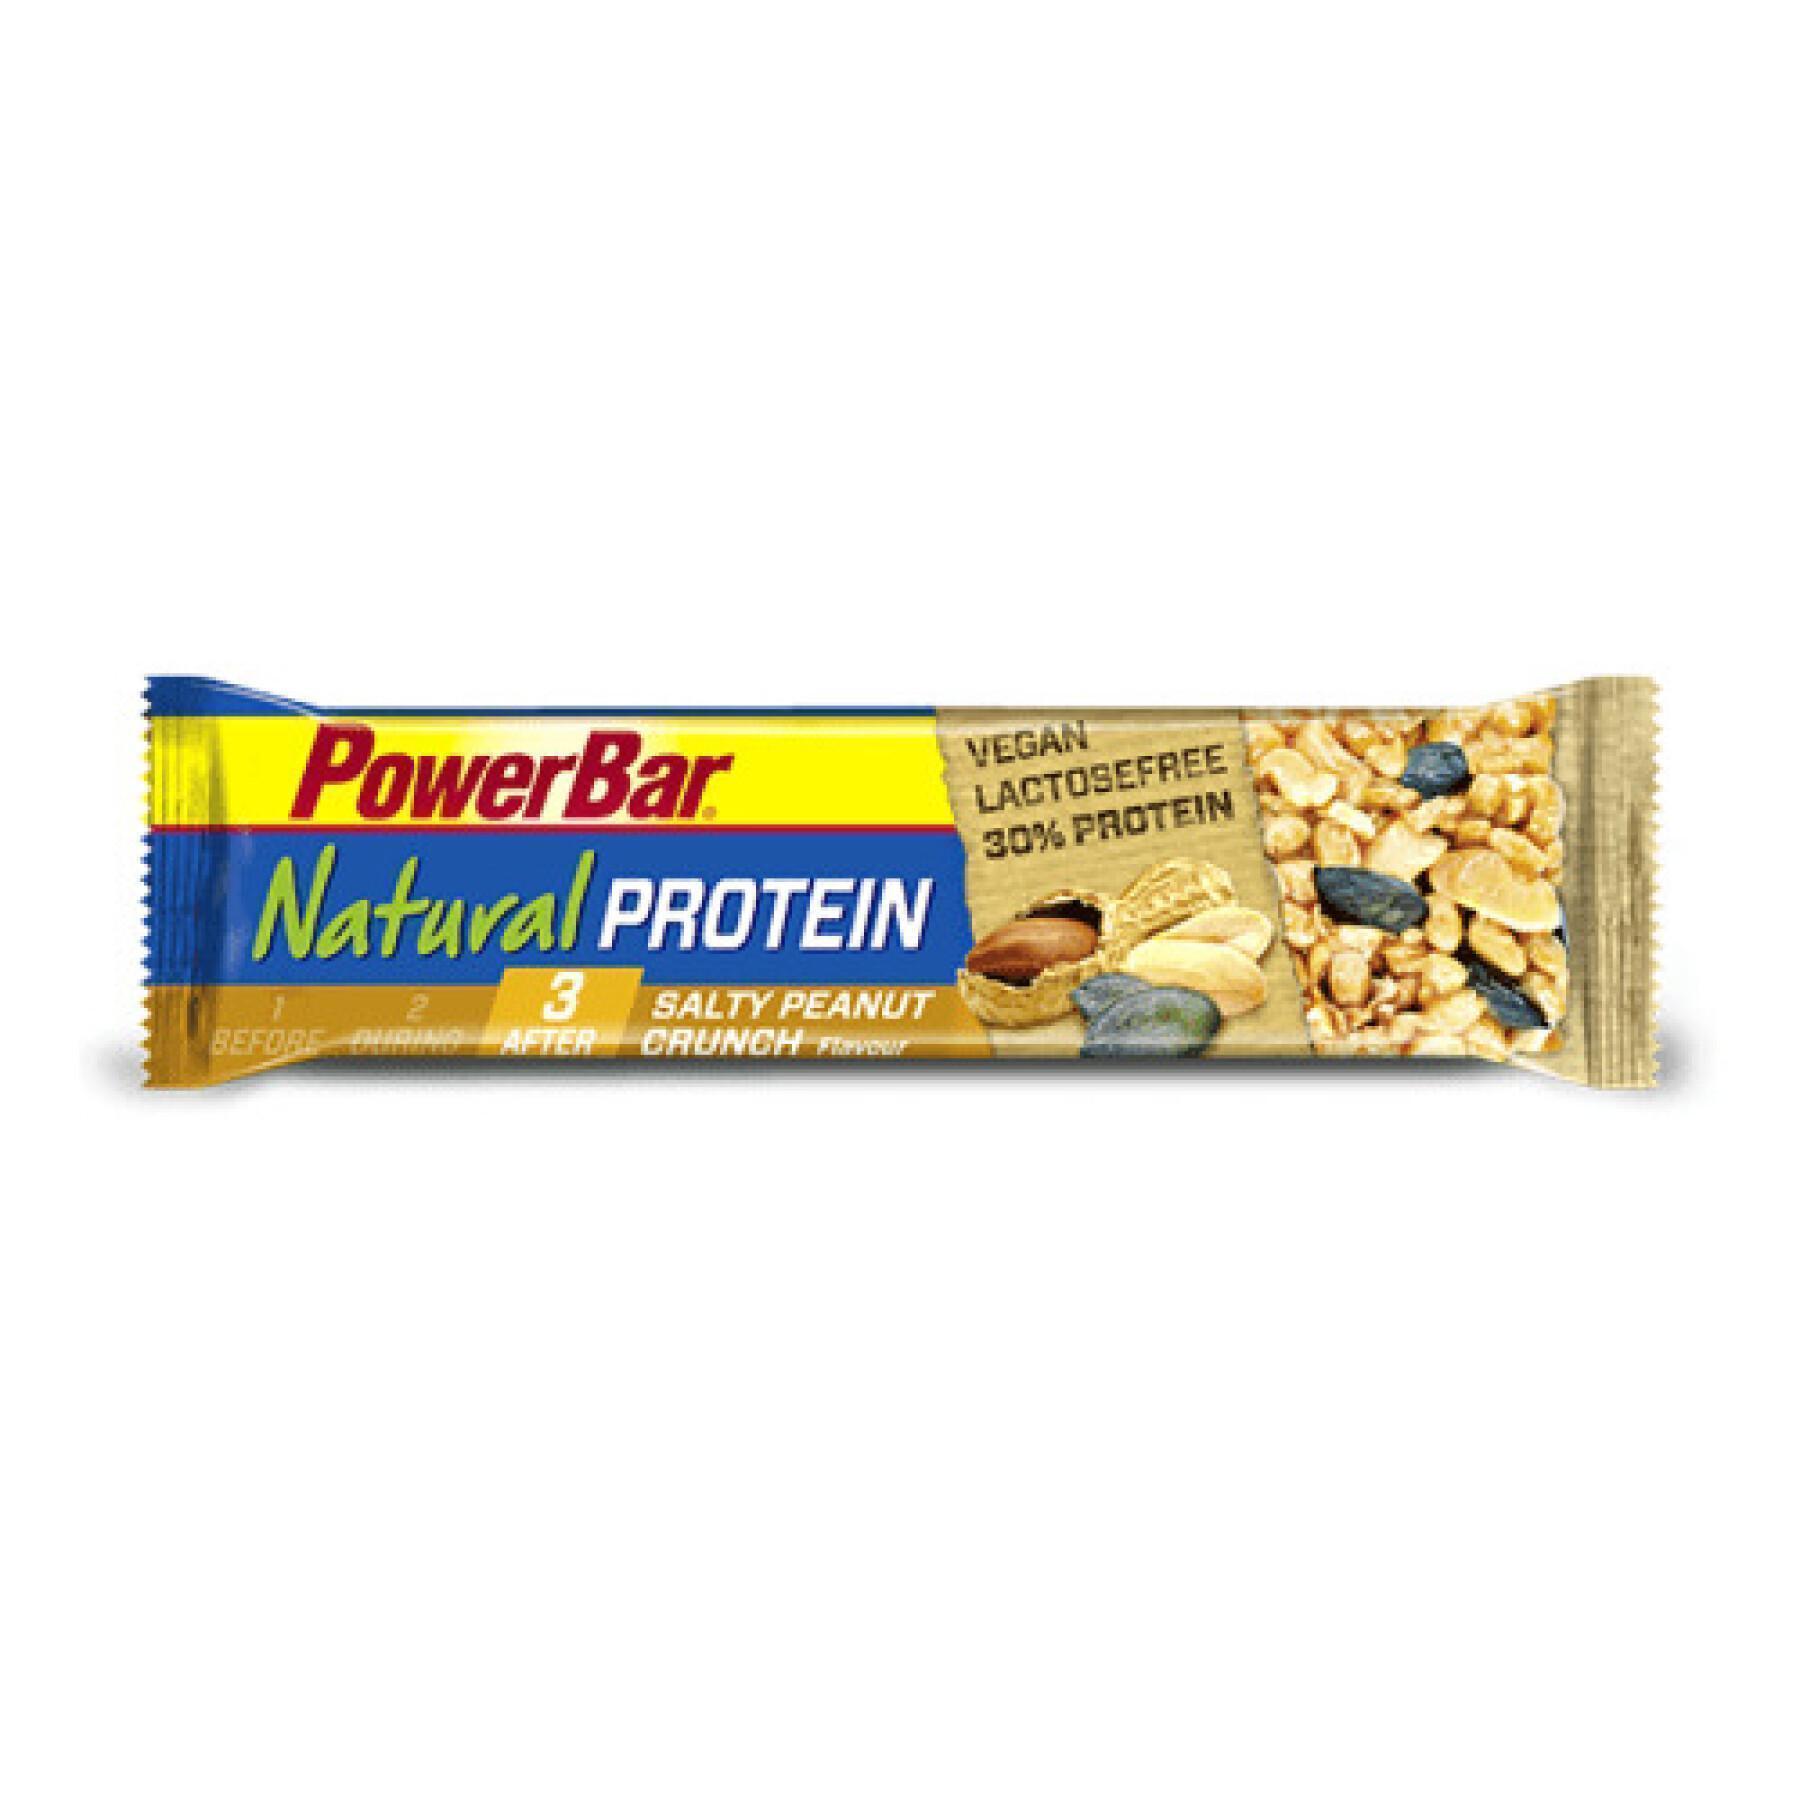 Partia 24 sztabek PowerBar Natural Protein Vegan - Salty Peanut Crunch